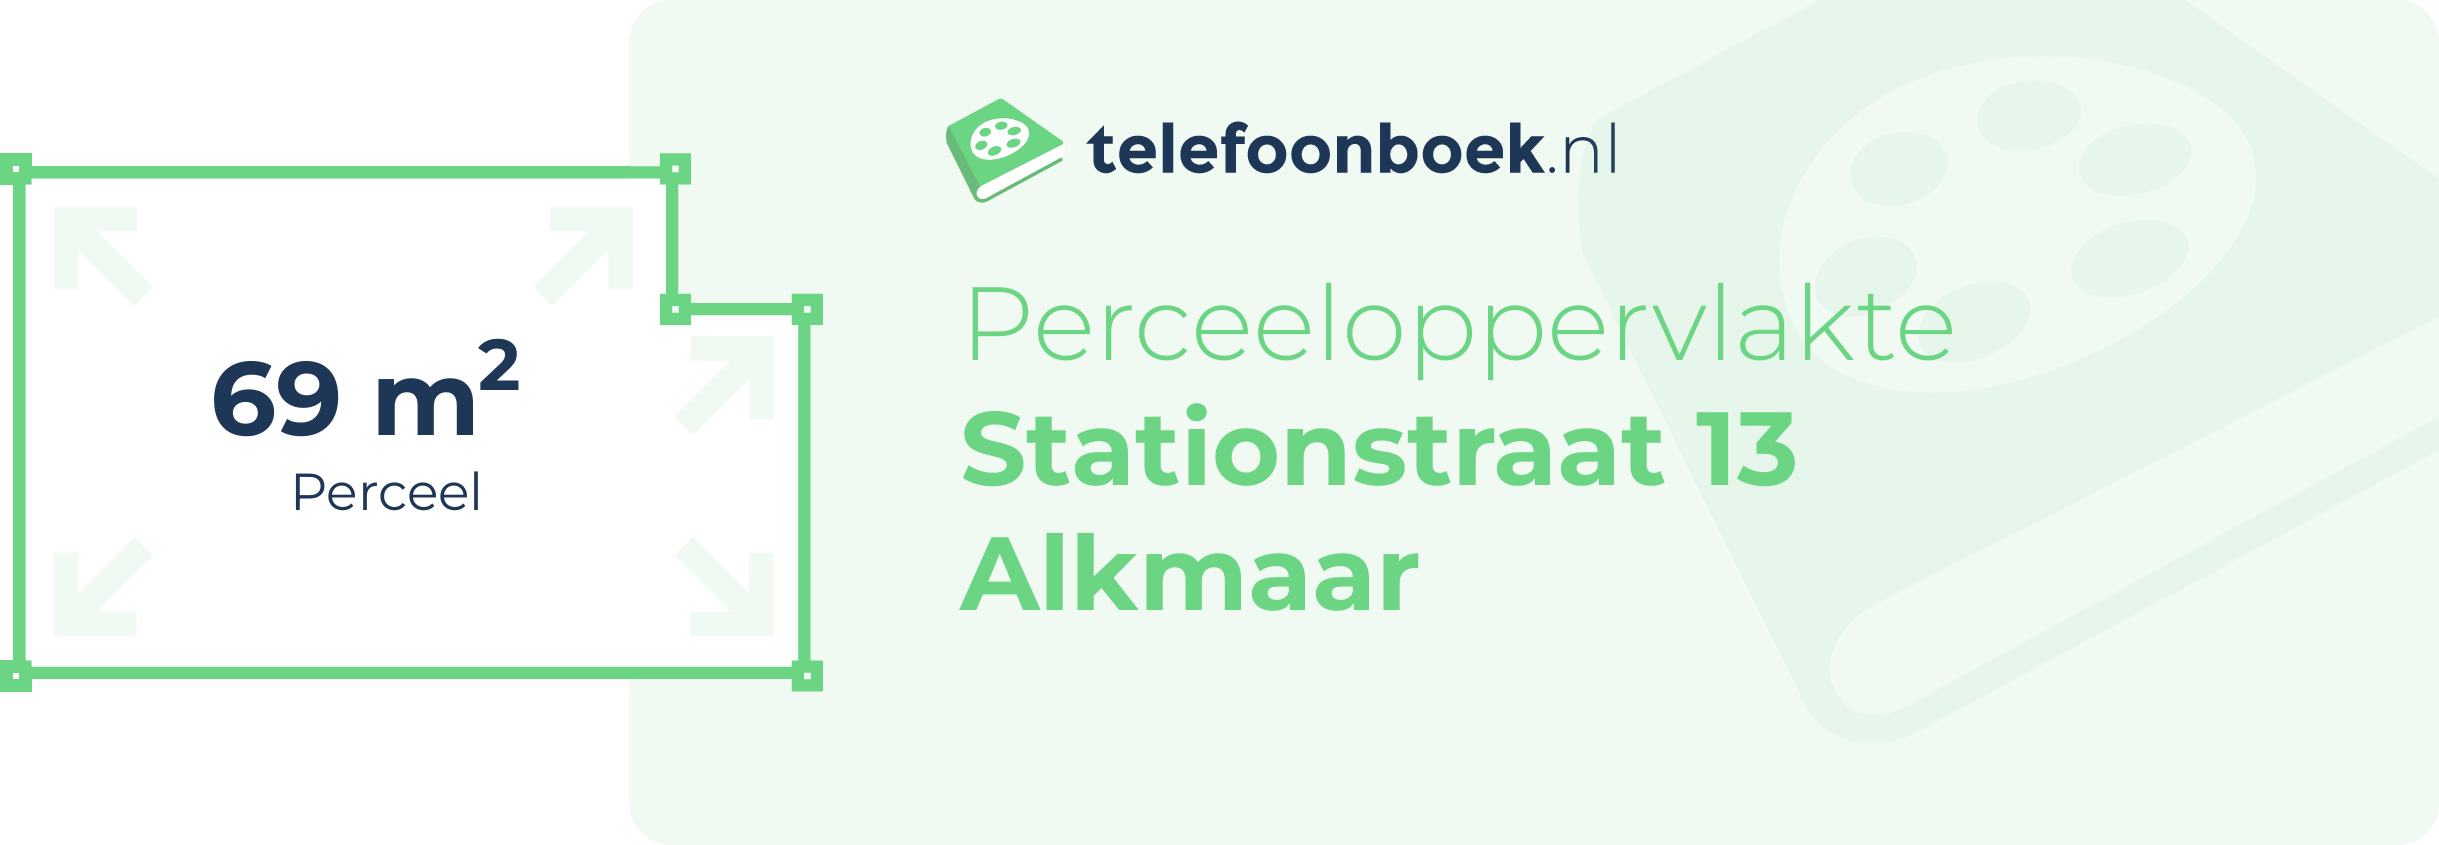 Perceeloppervlakte Stationstraat 13 Alkmaar